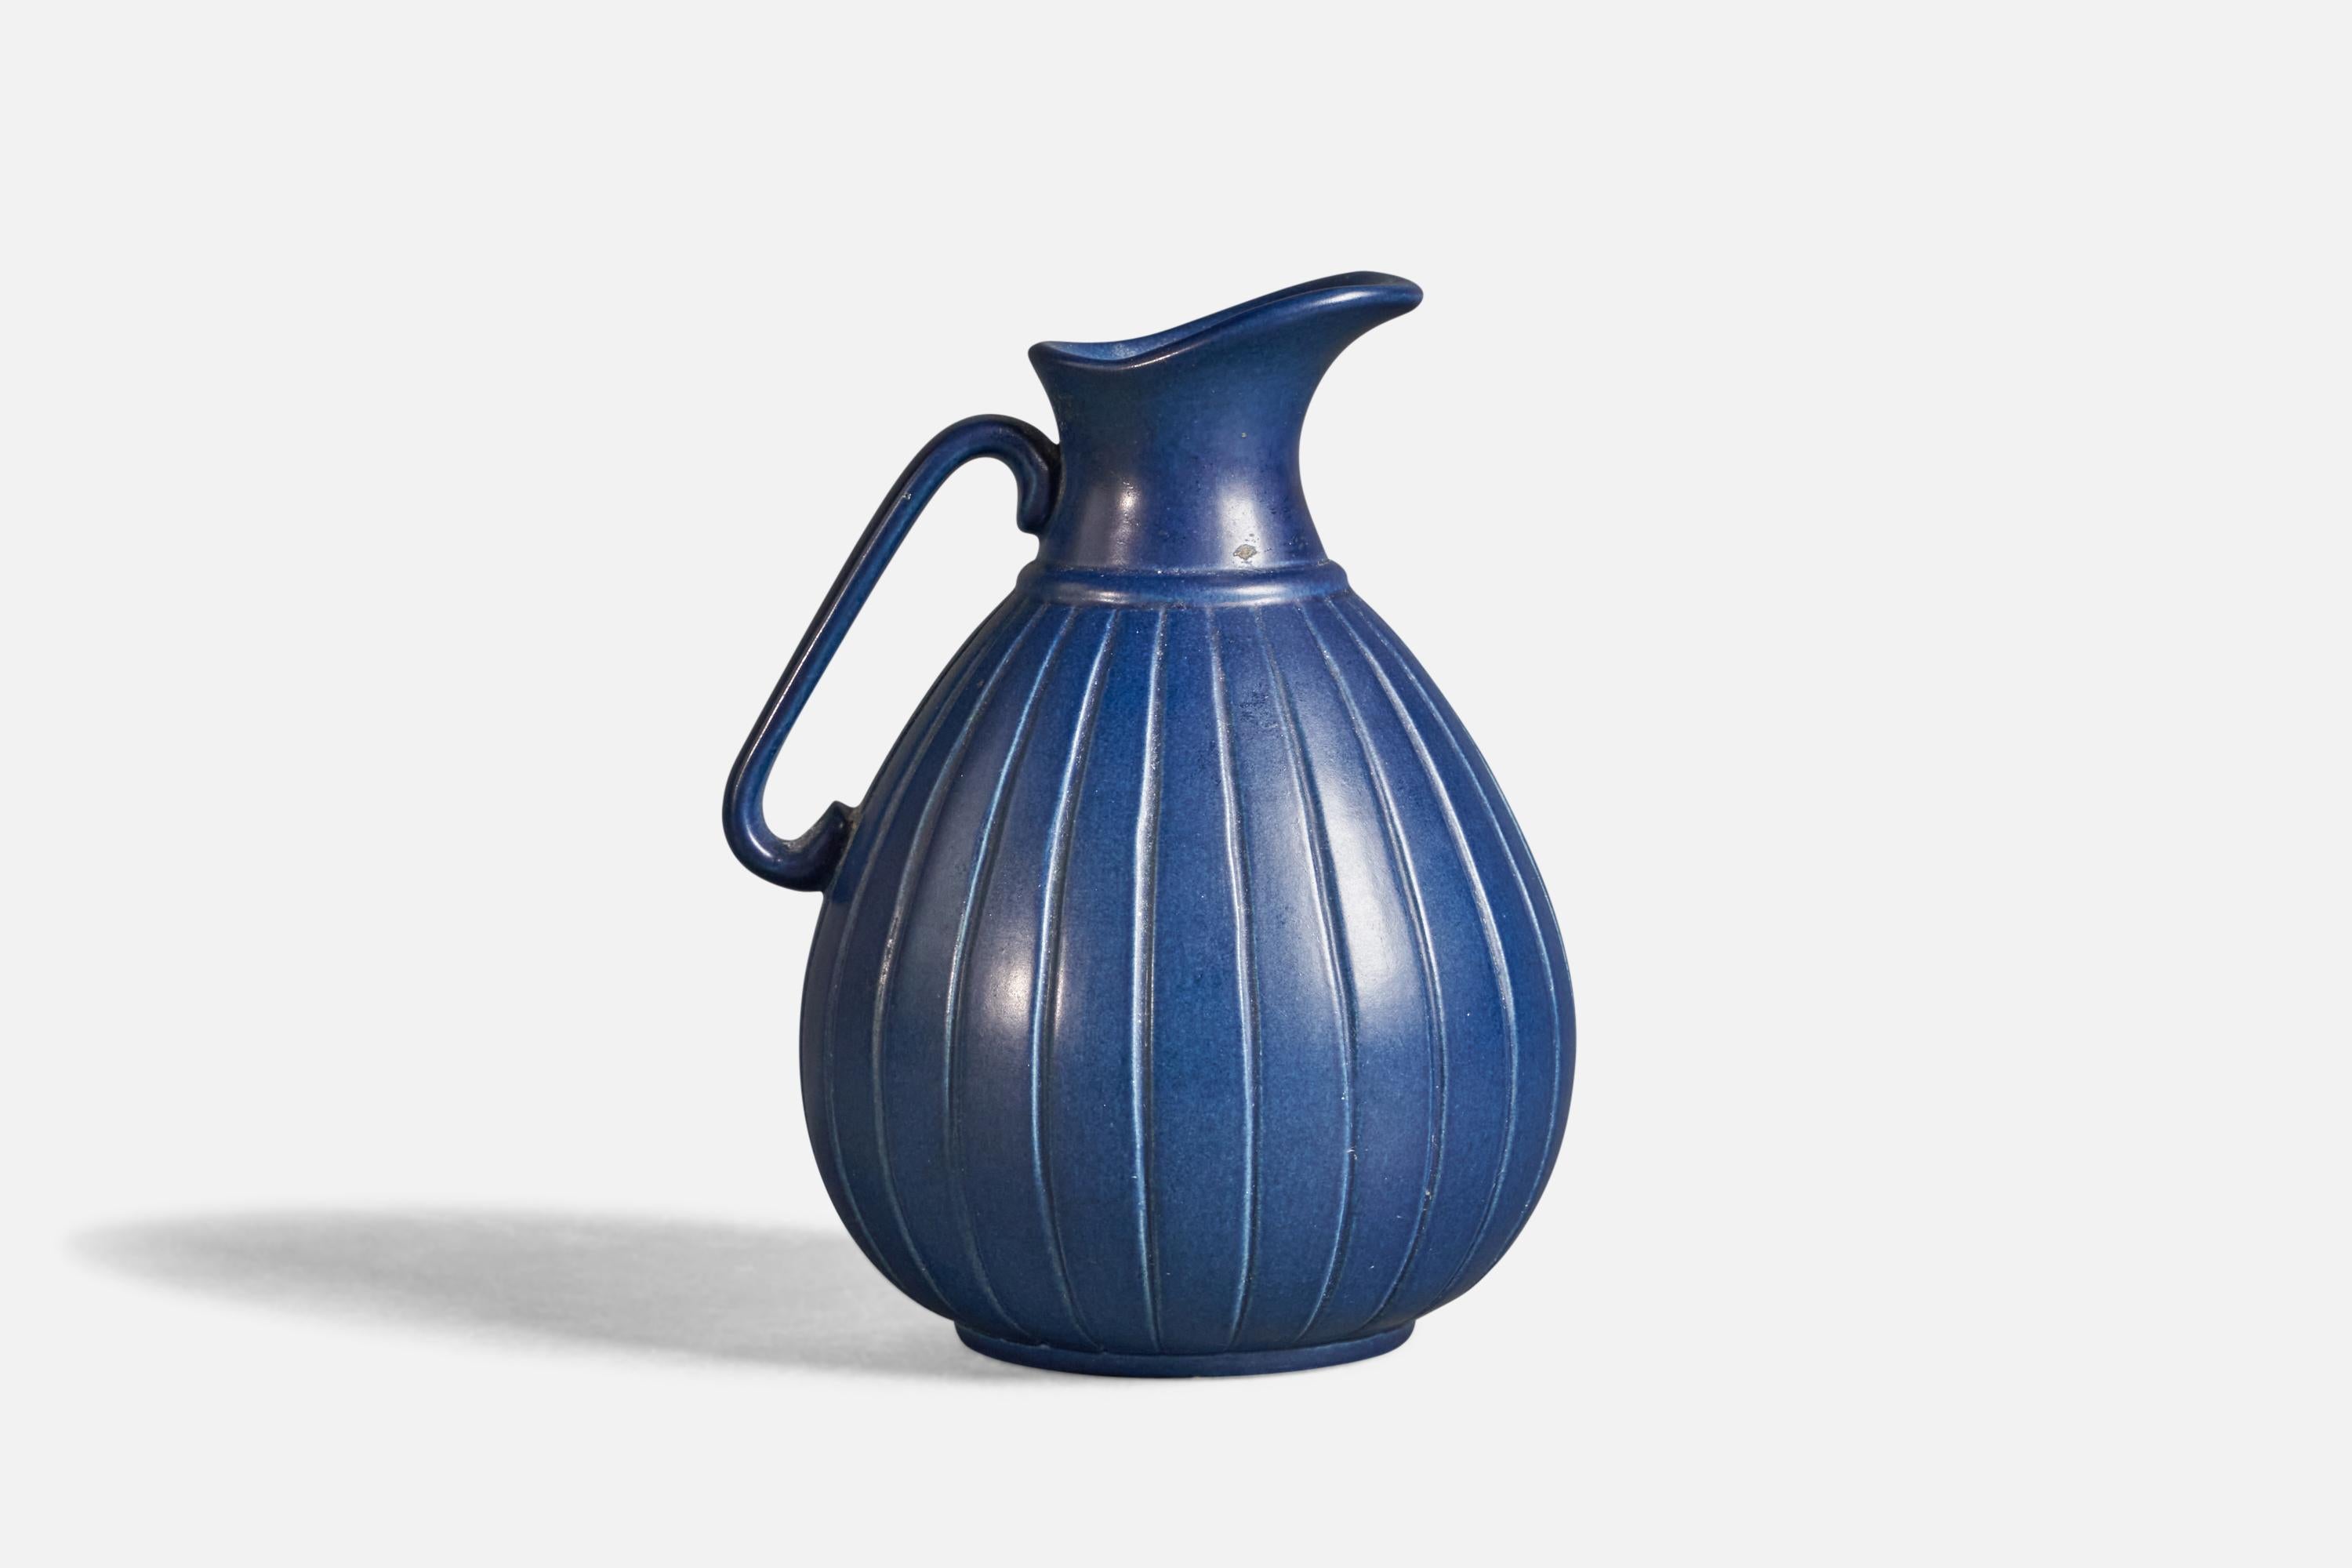 A blue-glazed stoneware pitcher or vase, designed and produced by Peter Ipsens Enke, Denmark, c. 1940s.